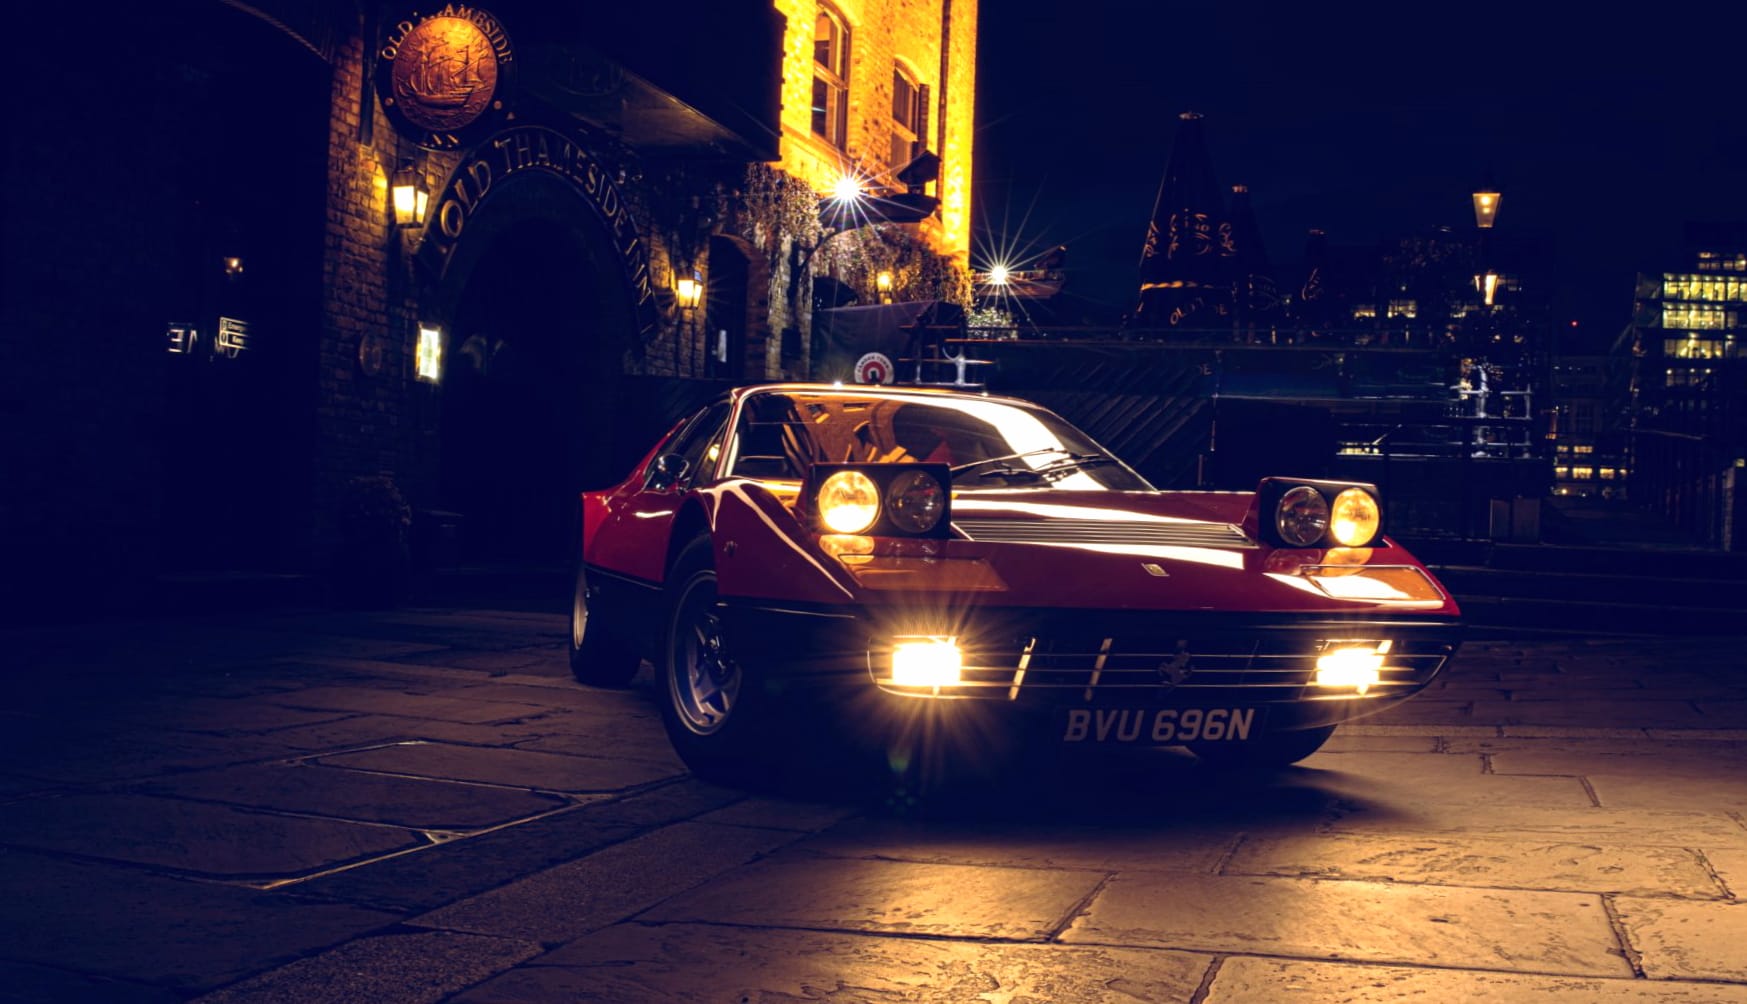 Ferrari Berlinetta Boxer at 1024 x 768 size wallpapers HD quality